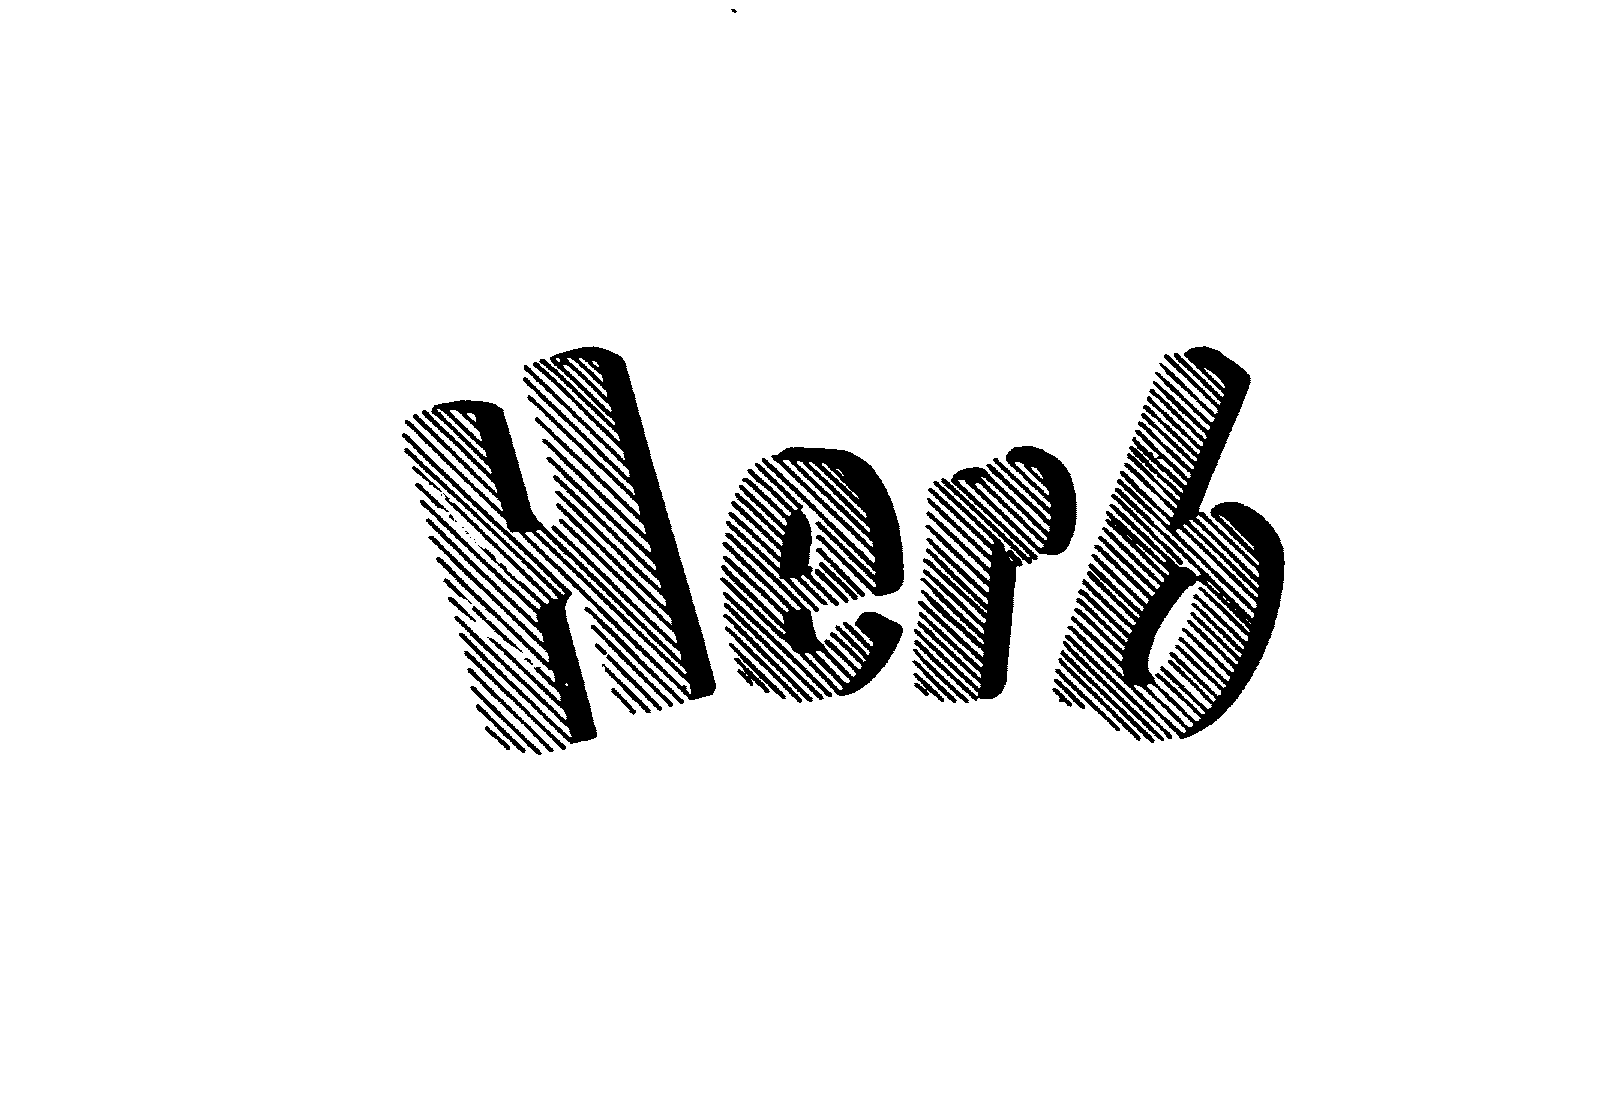 Trademark Logo HERB